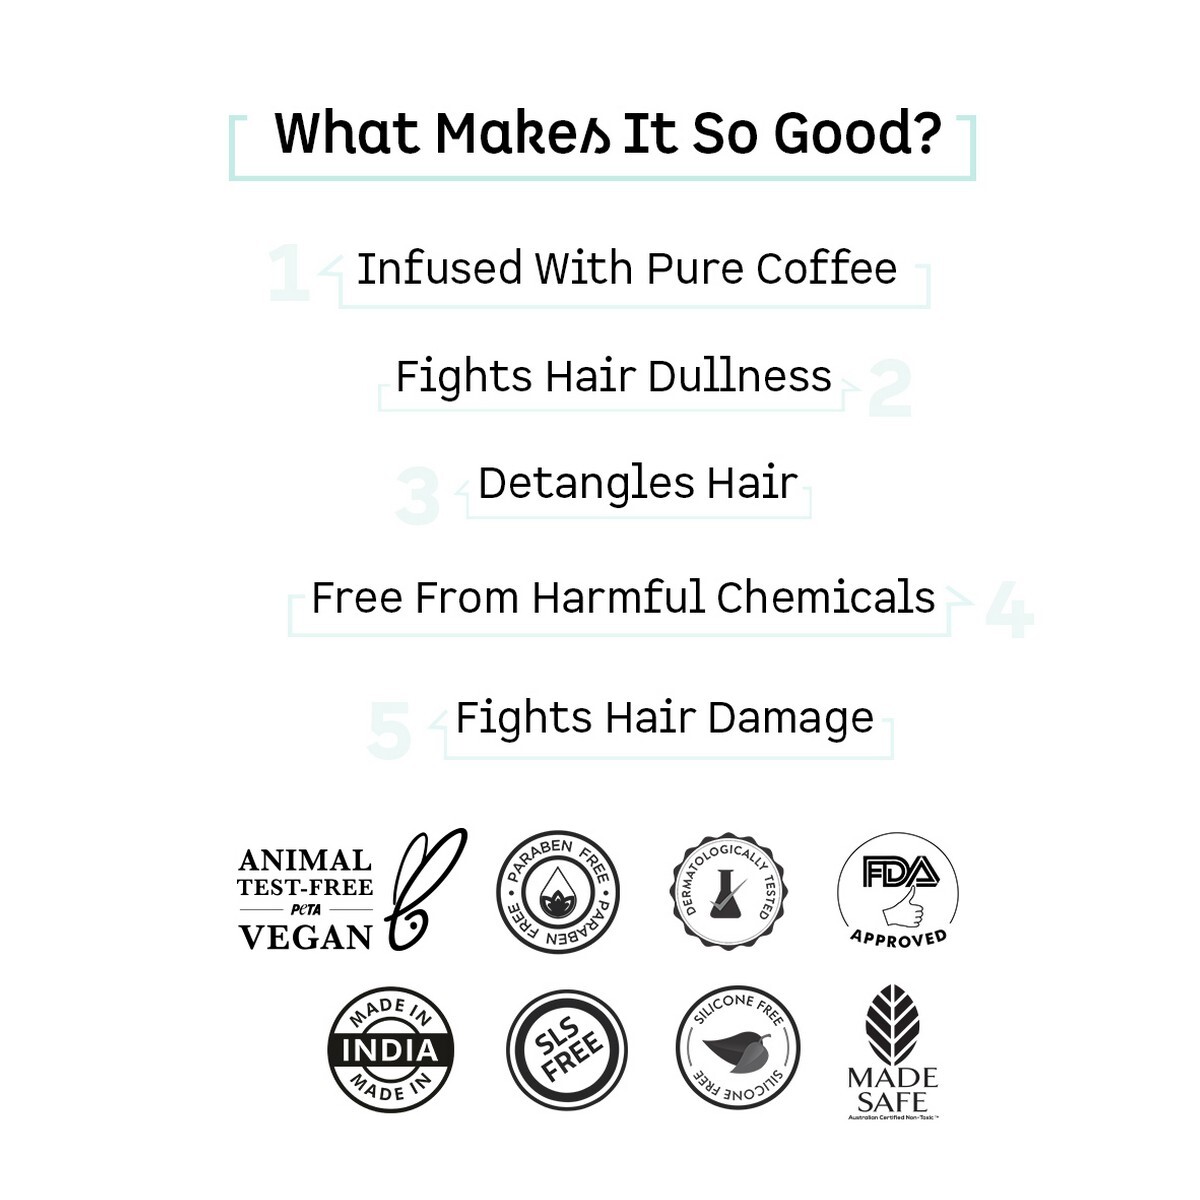 mCaffeine Naked & Raw Coffee Hair Conditioner (250 ml)